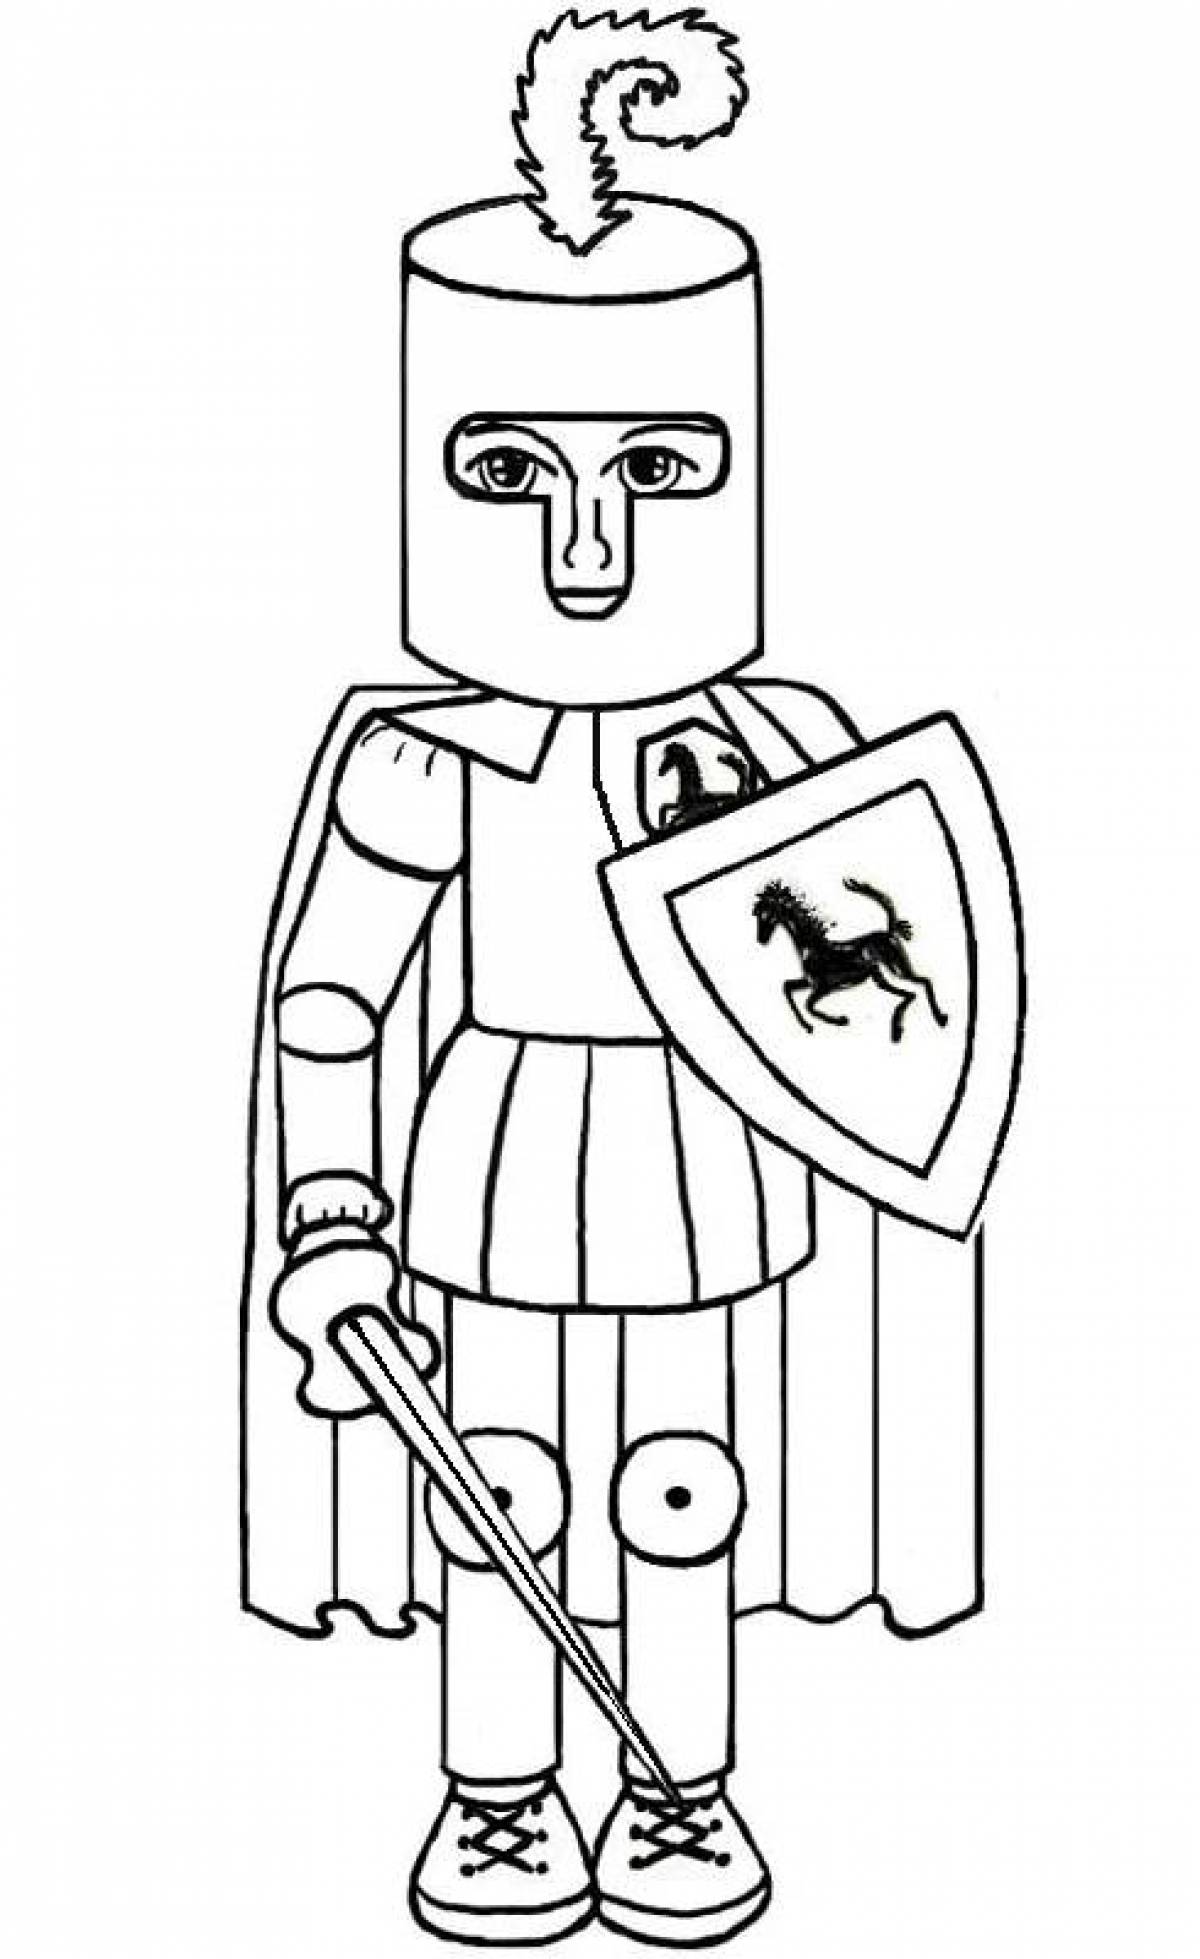 Knight costume